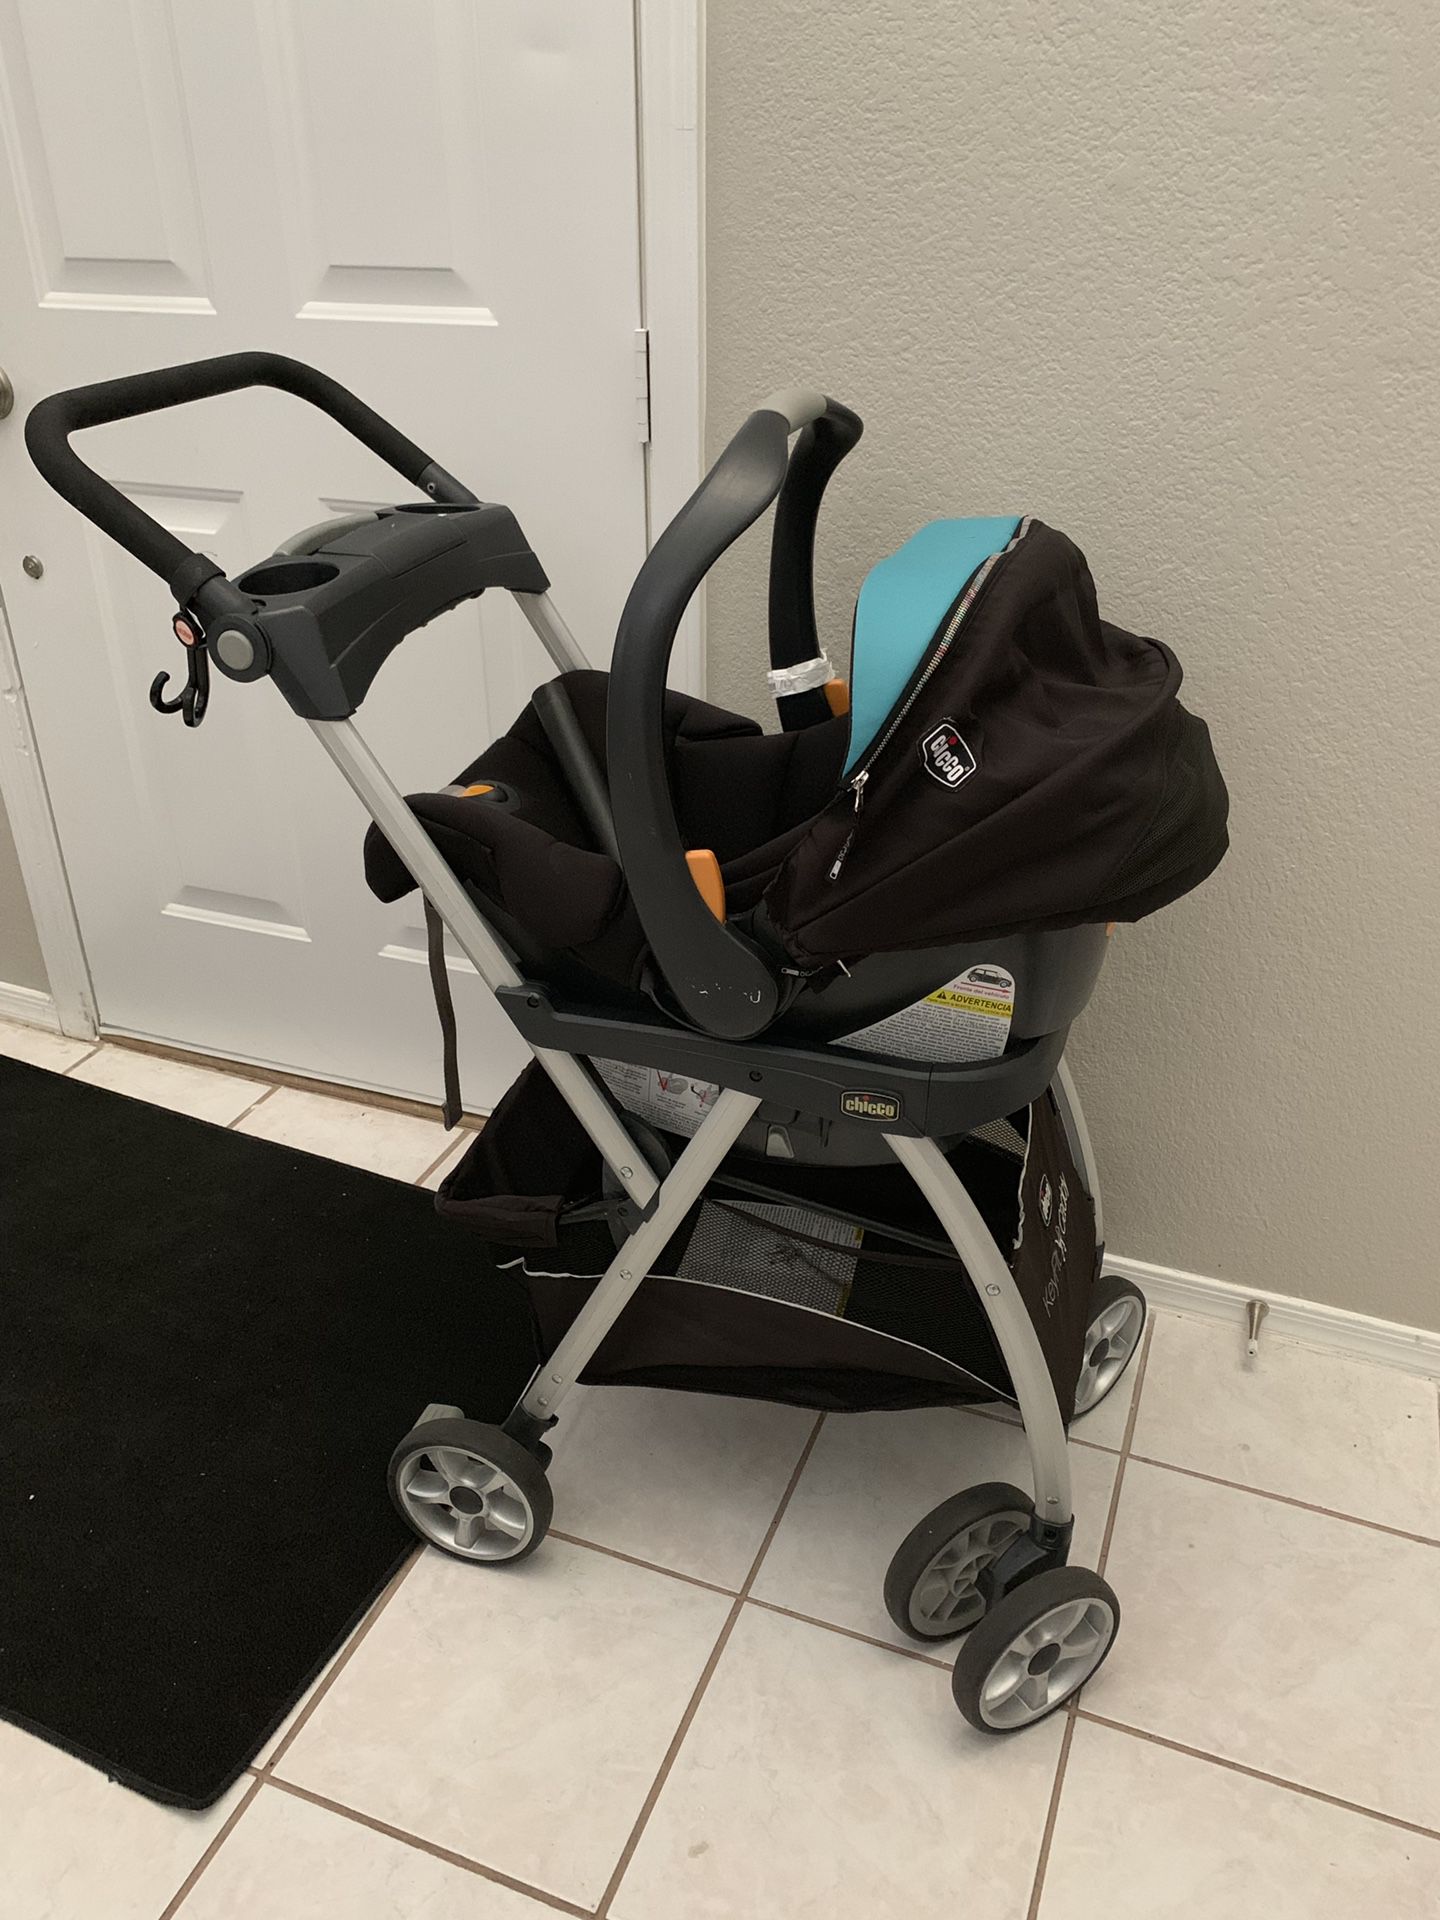 Infant Car seat / caddy - stroller / base